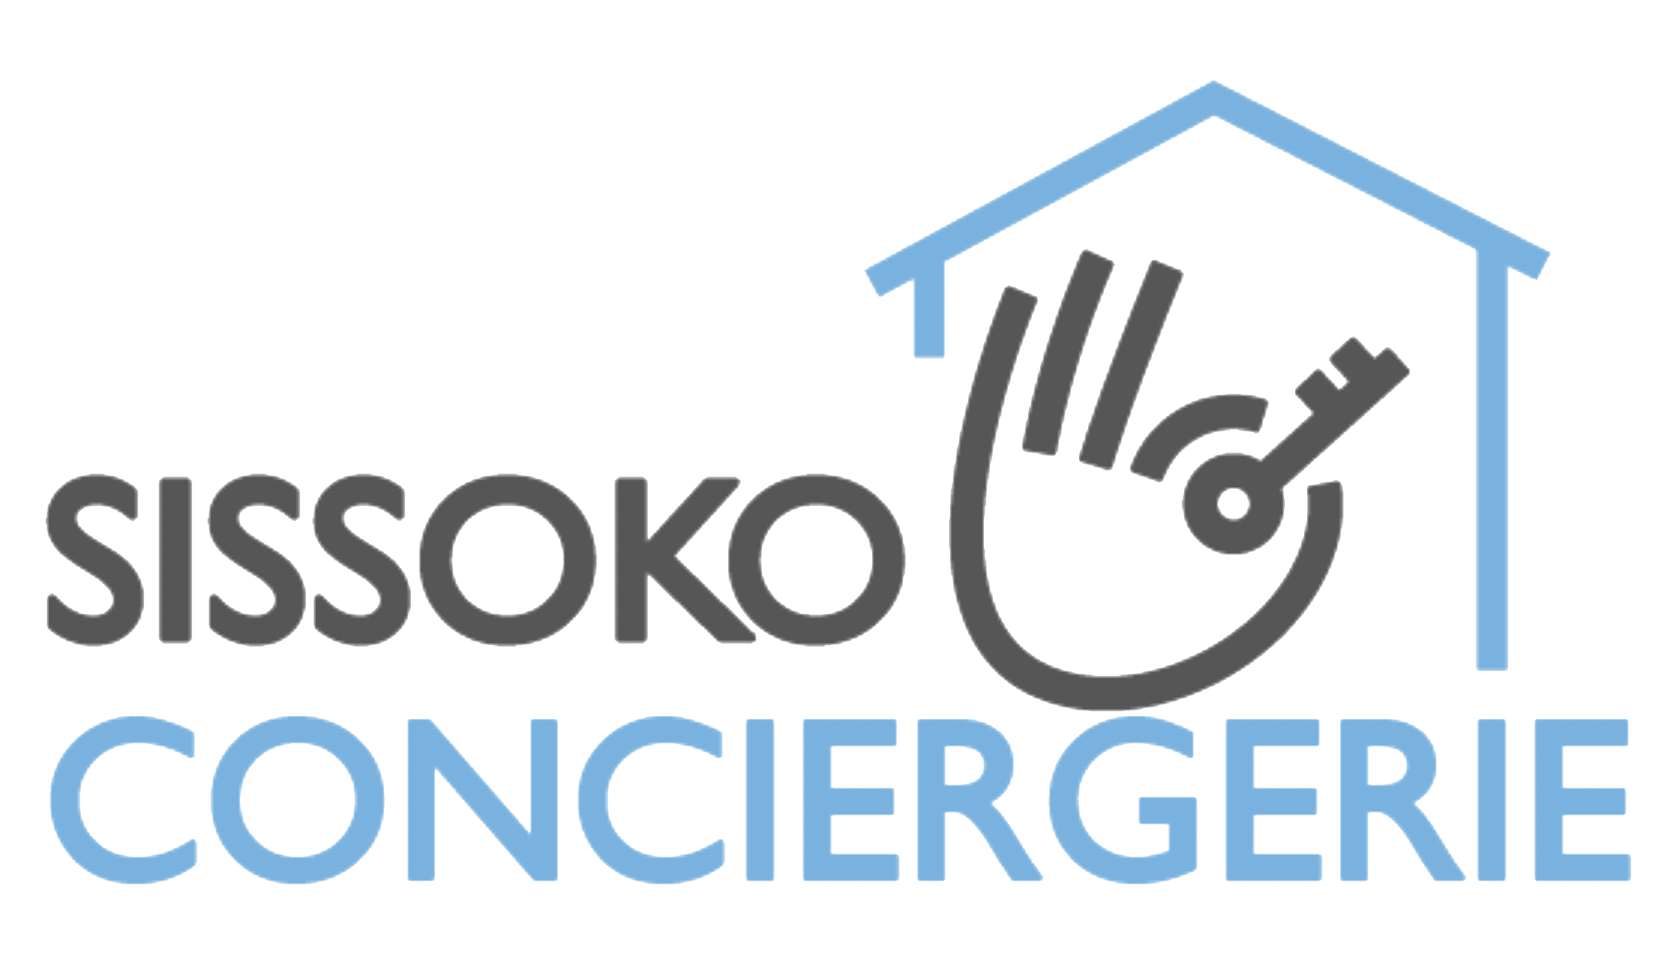 Sissoko Conciergerie